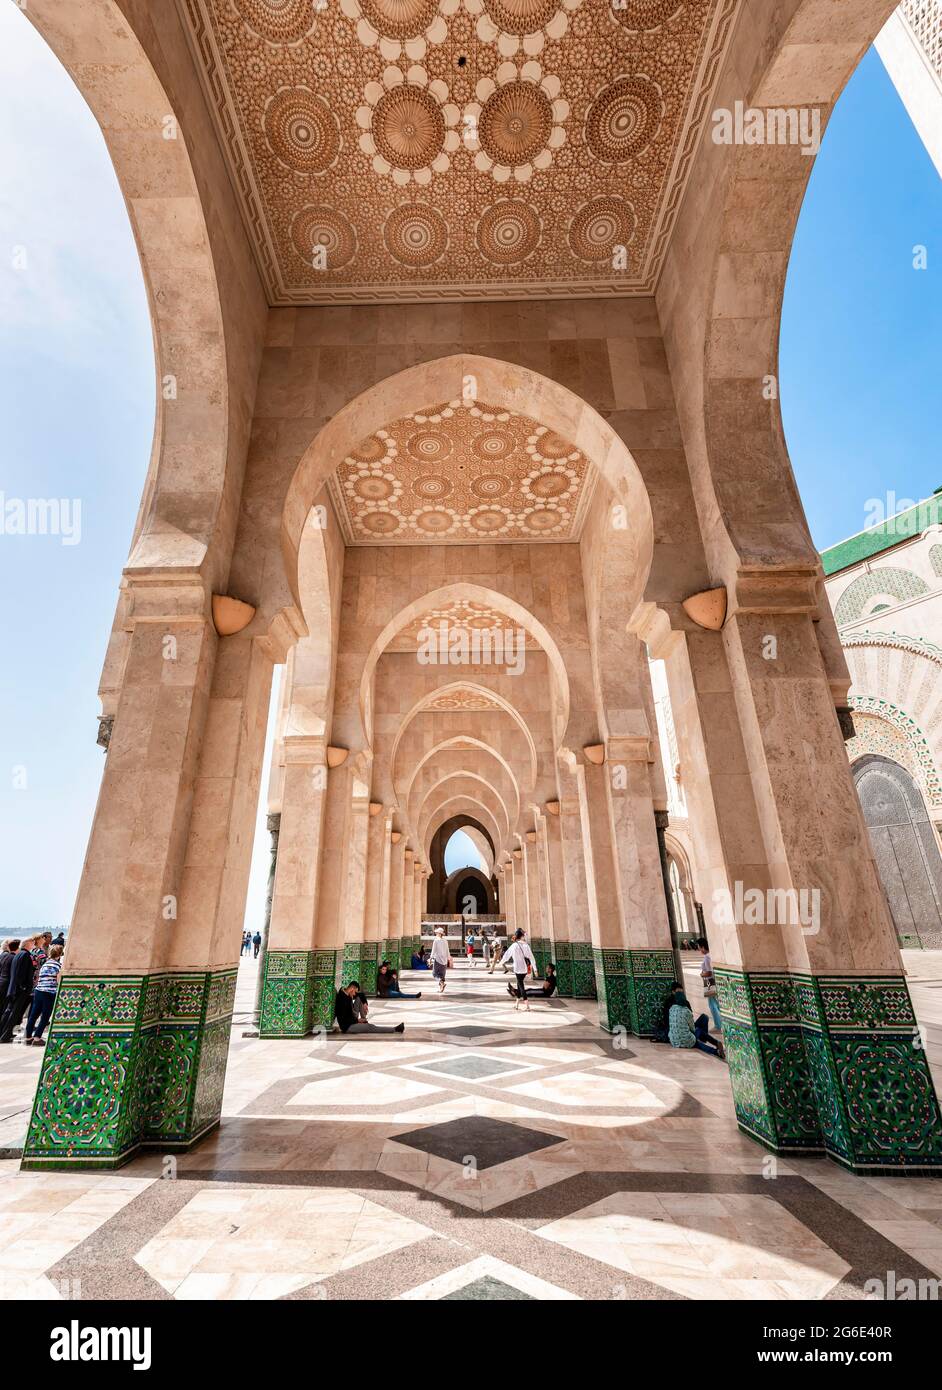 Portique, Mosquée Hassan II, Grande Mosquee Hassan II, architecture mauresque, Casablanca, Maroc Banque D'Images